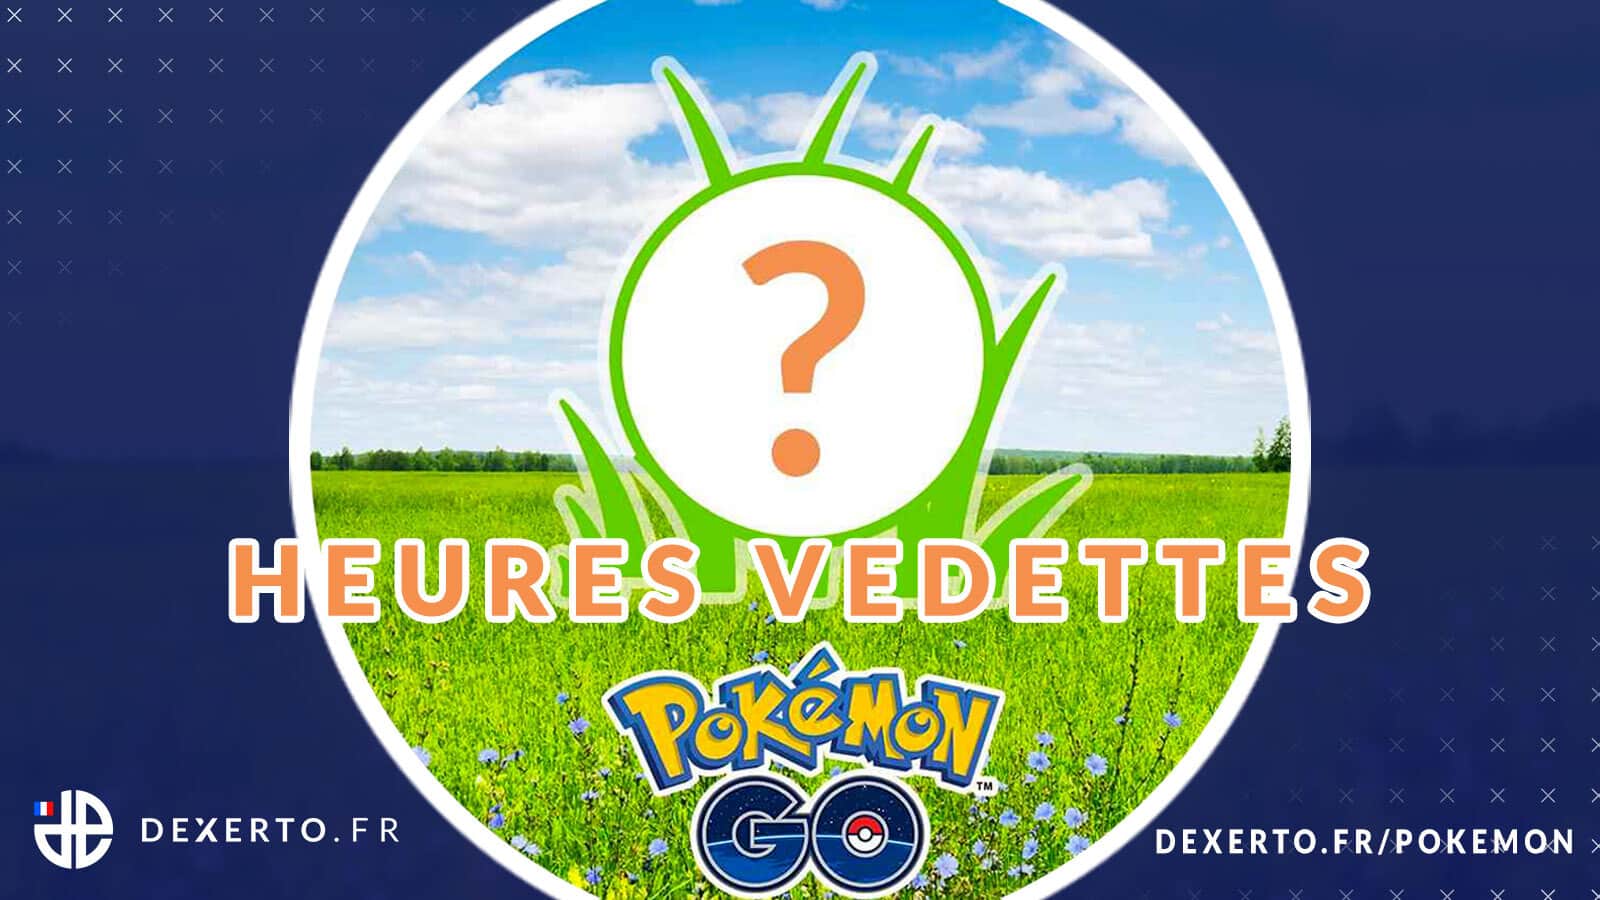 https://editors.dexerto.fr/wp-content/uploads/sites/2/2021/10/19/heures-vedettes-pokemon-go.jpg